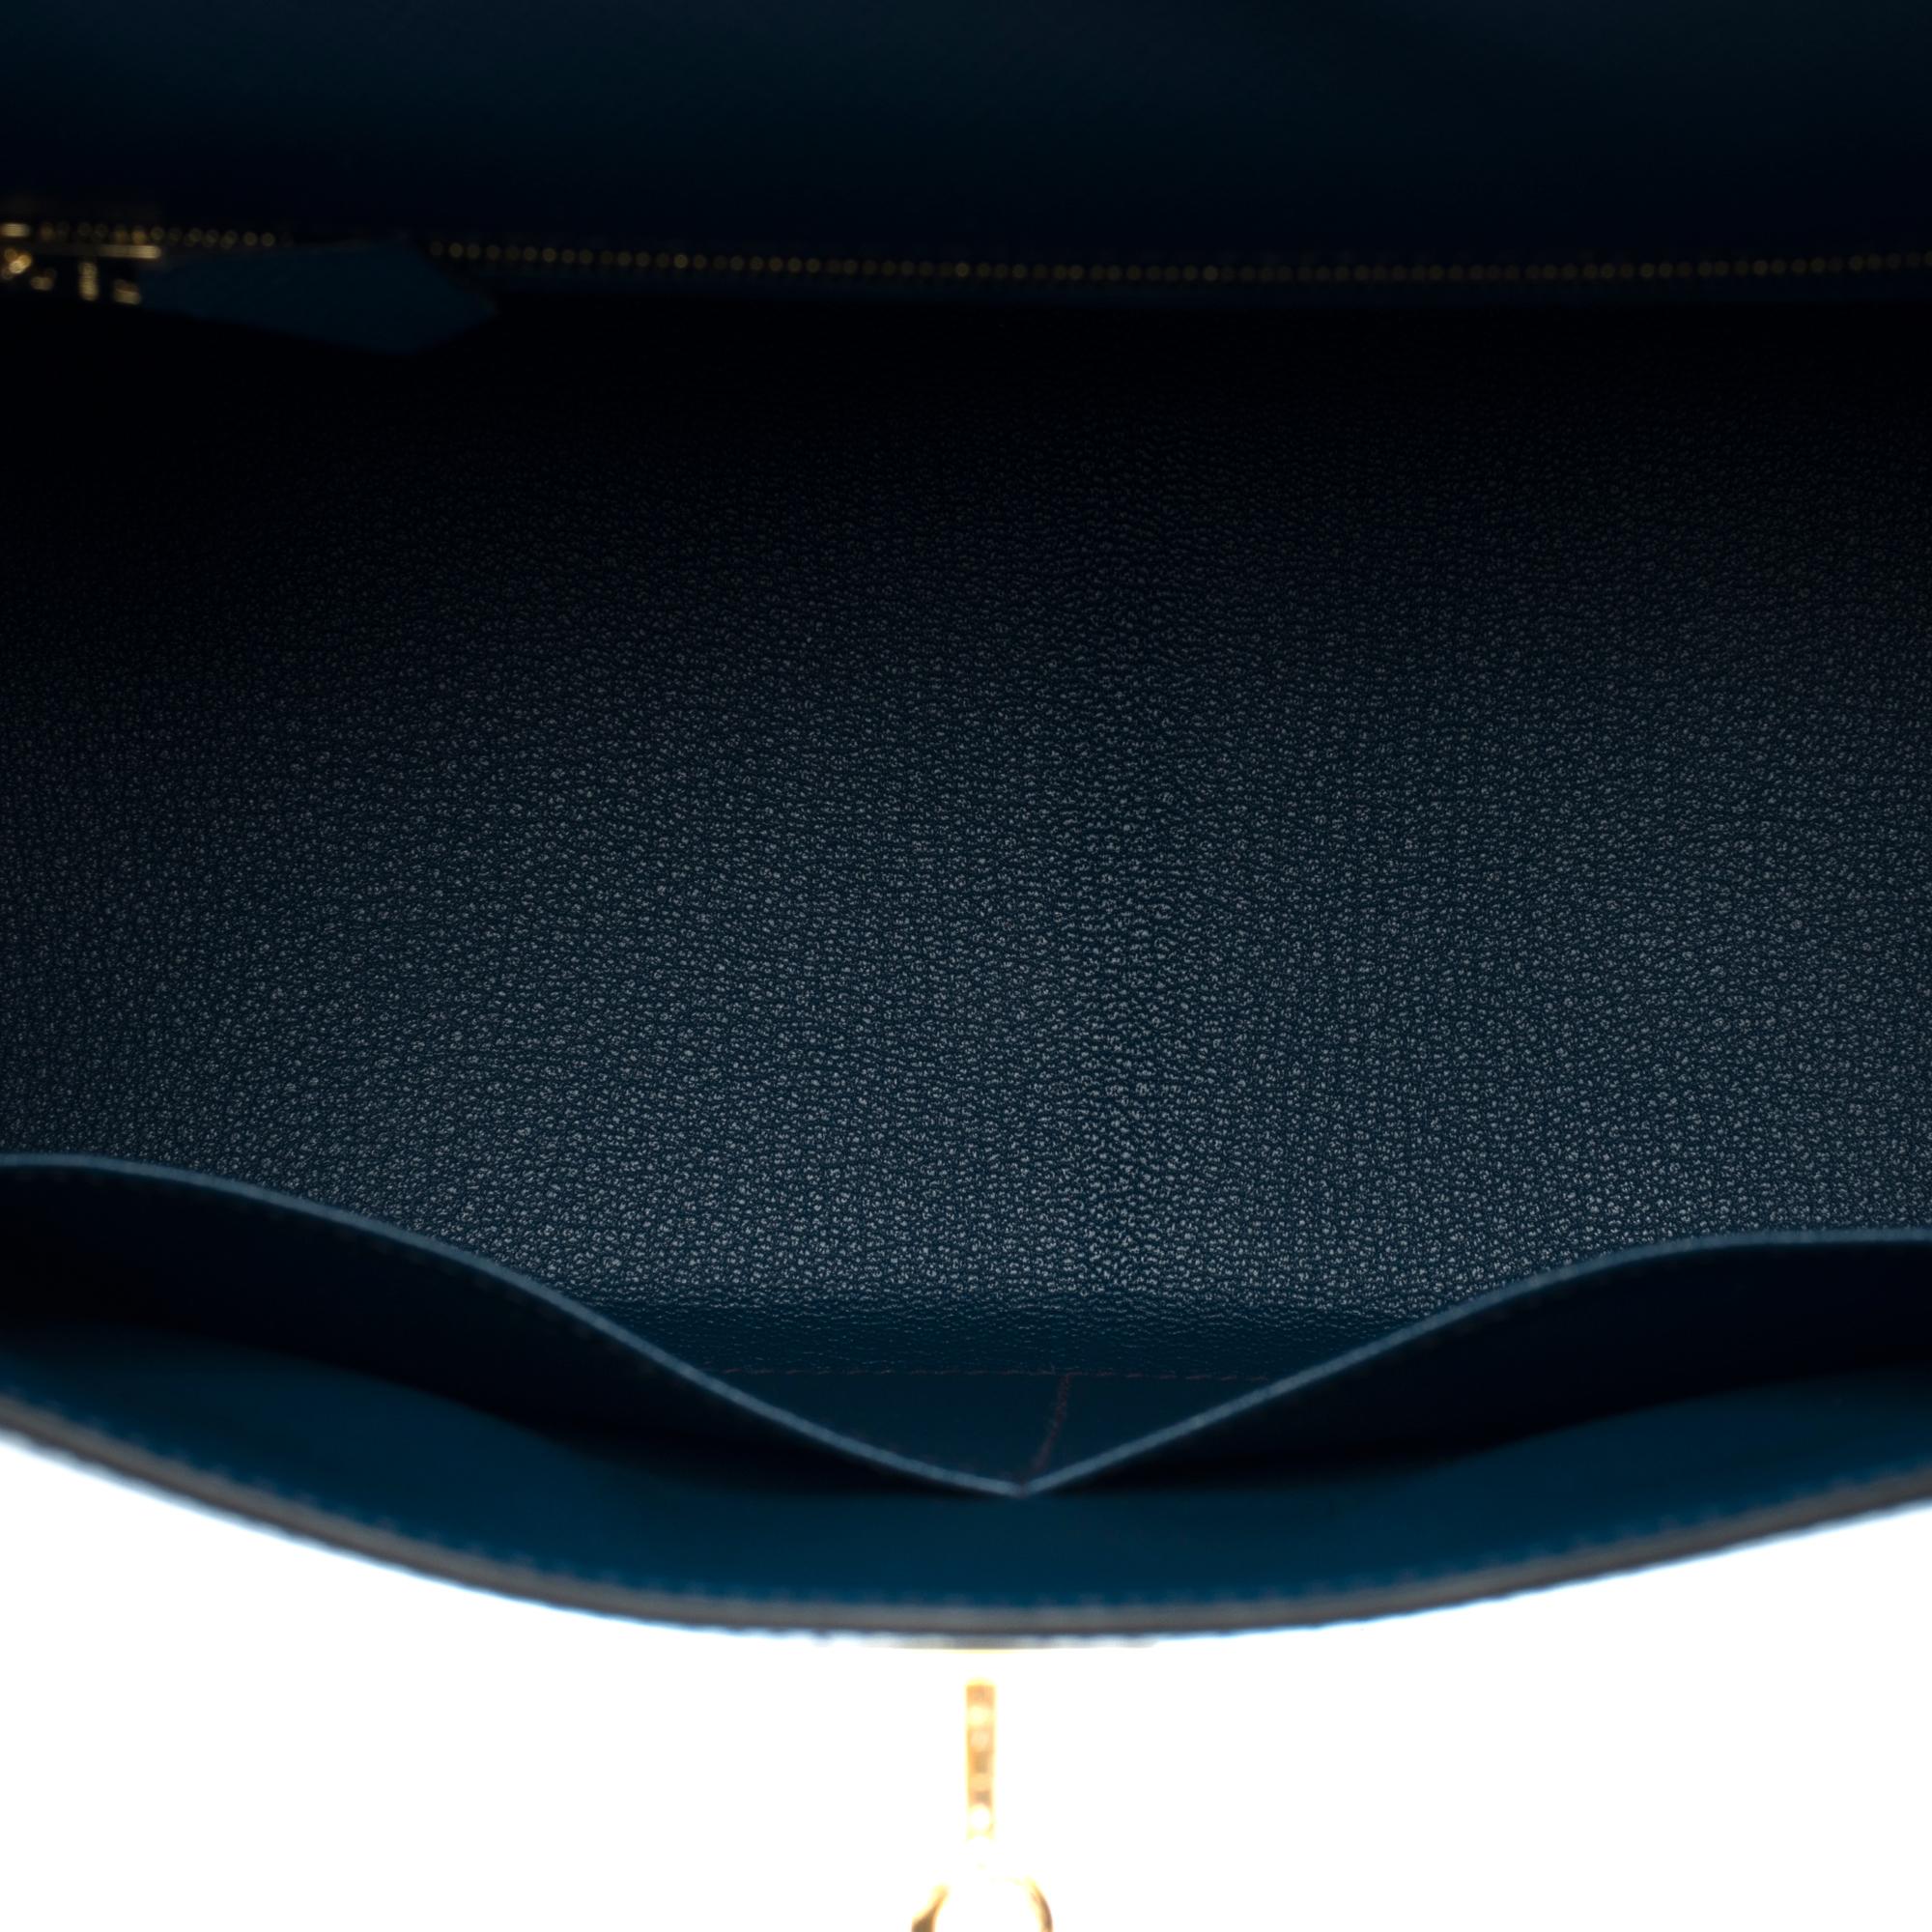 New Hermès Kelly 28 sellier handbag strap in Prussian blue Epsom leather, GHW 4